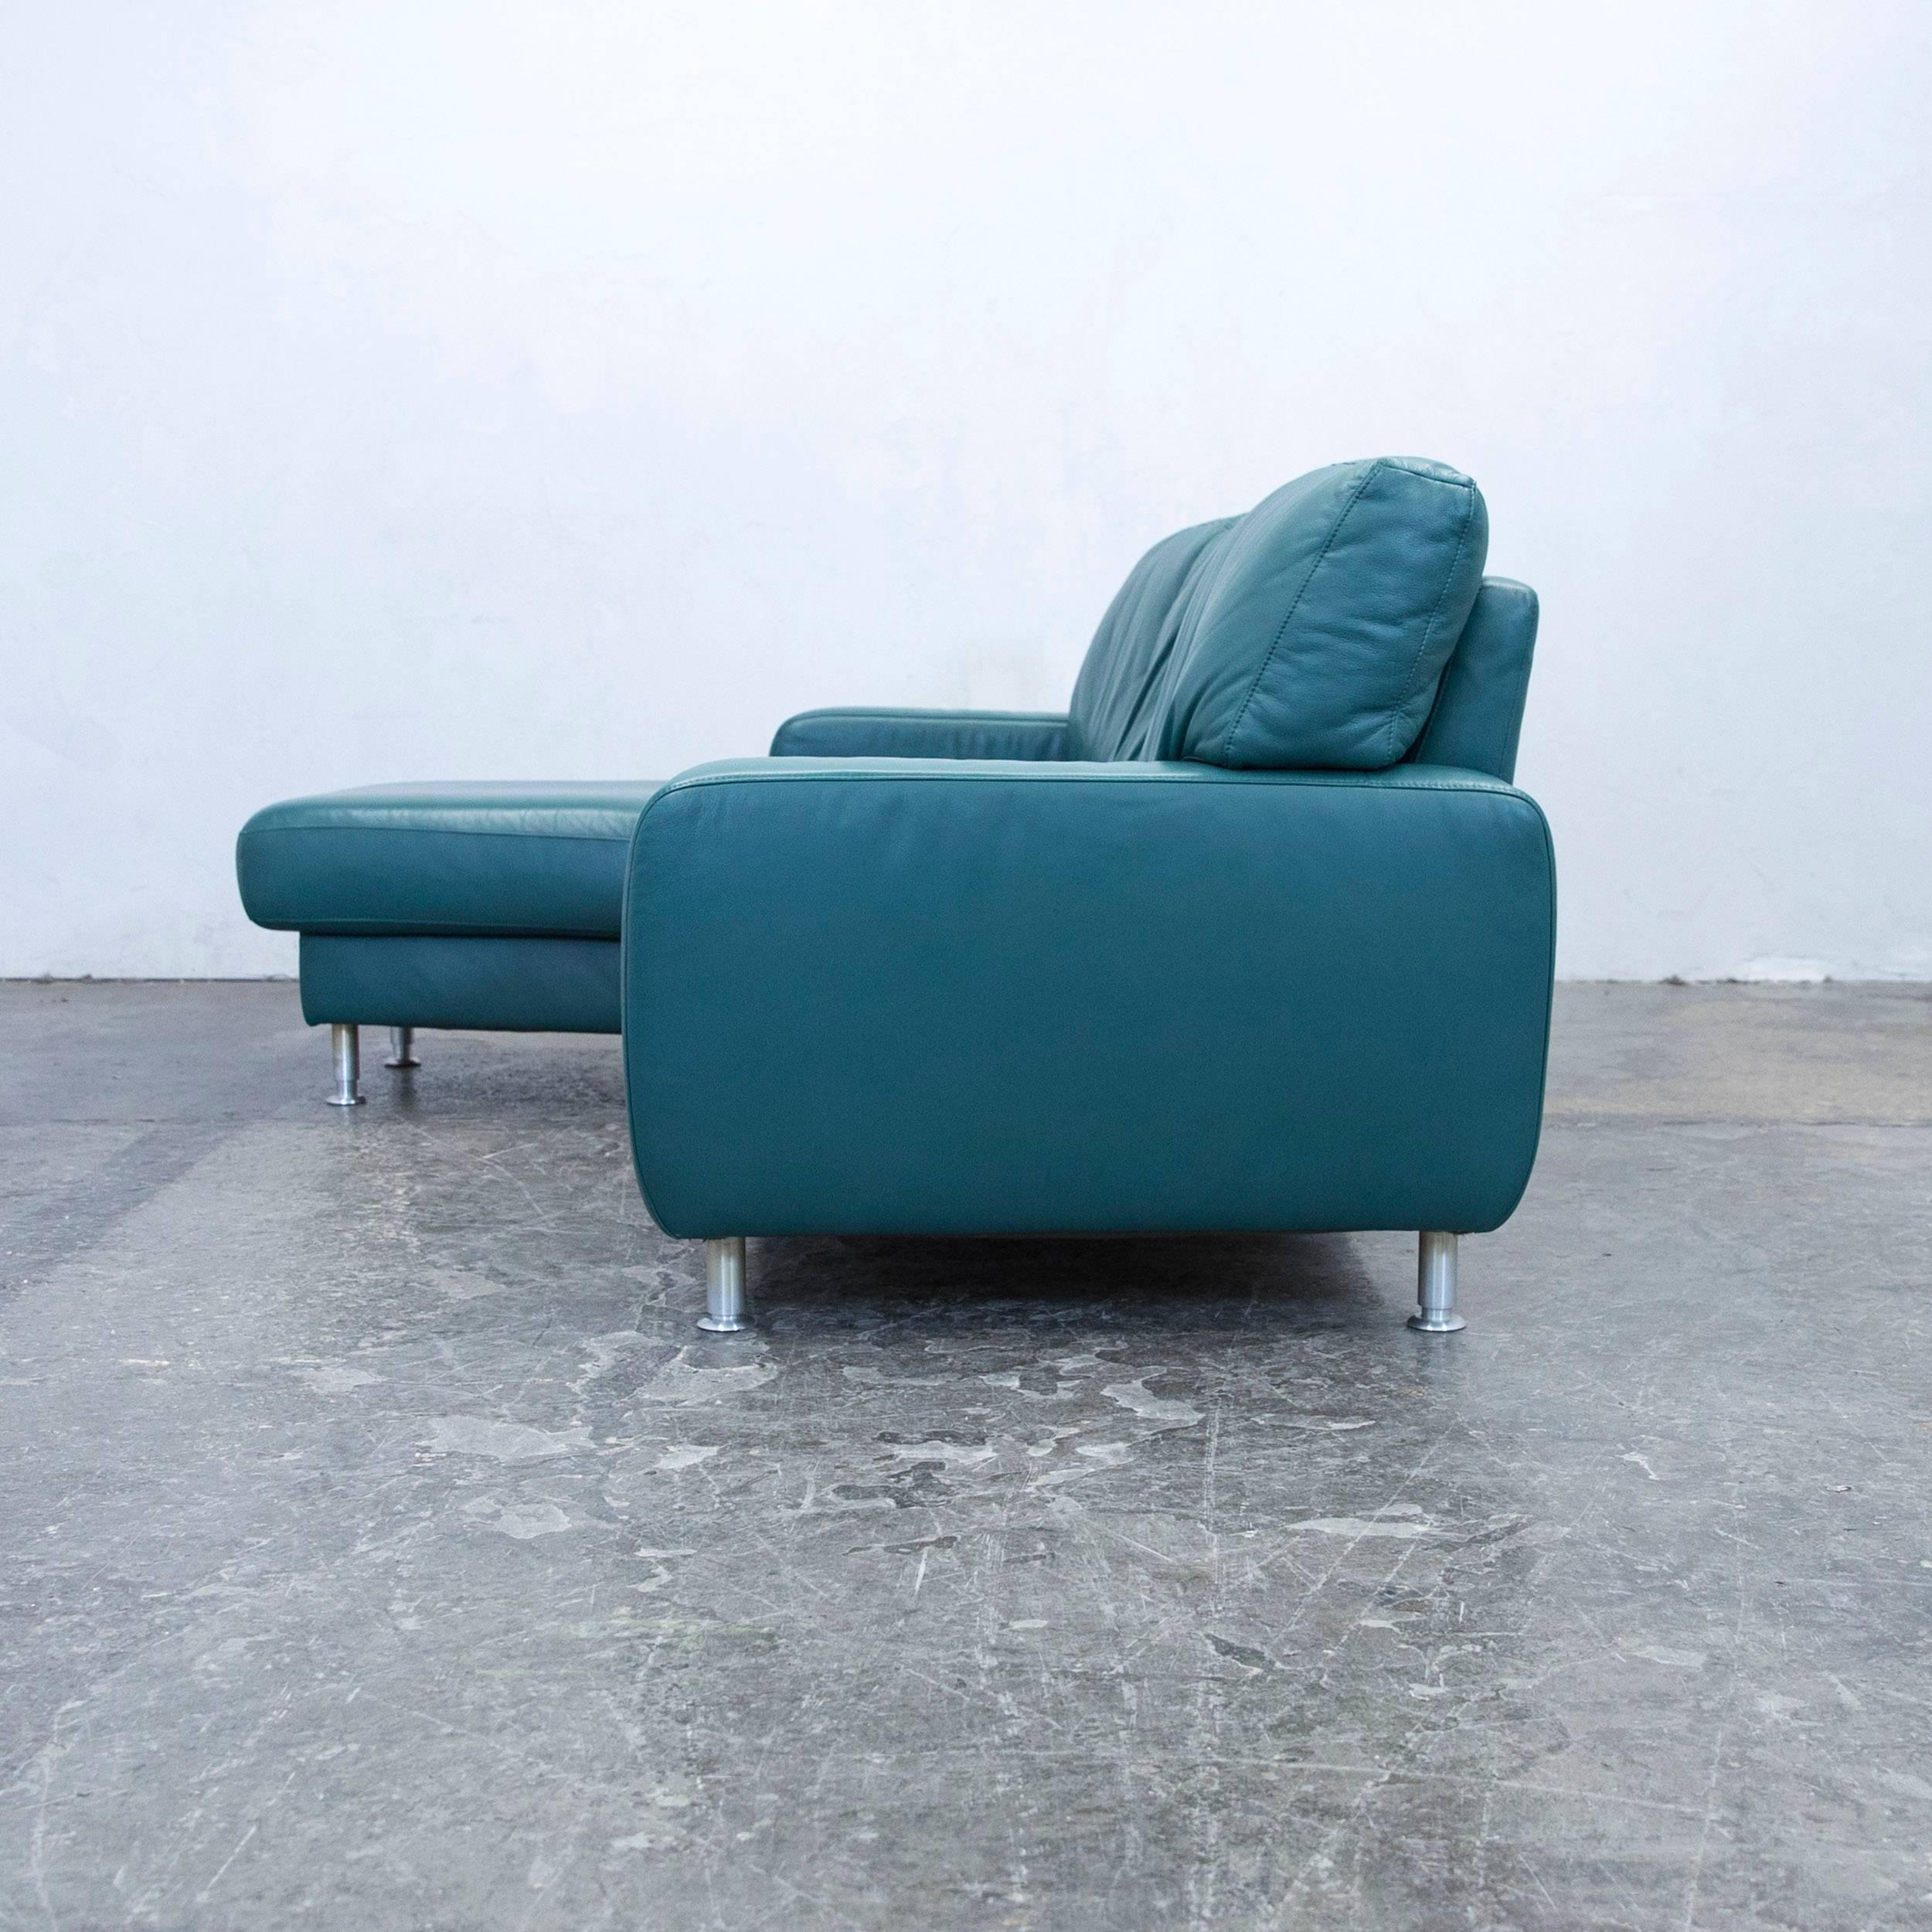 Koinor Designer Corner Sofa Leather Green Couch Modern 2